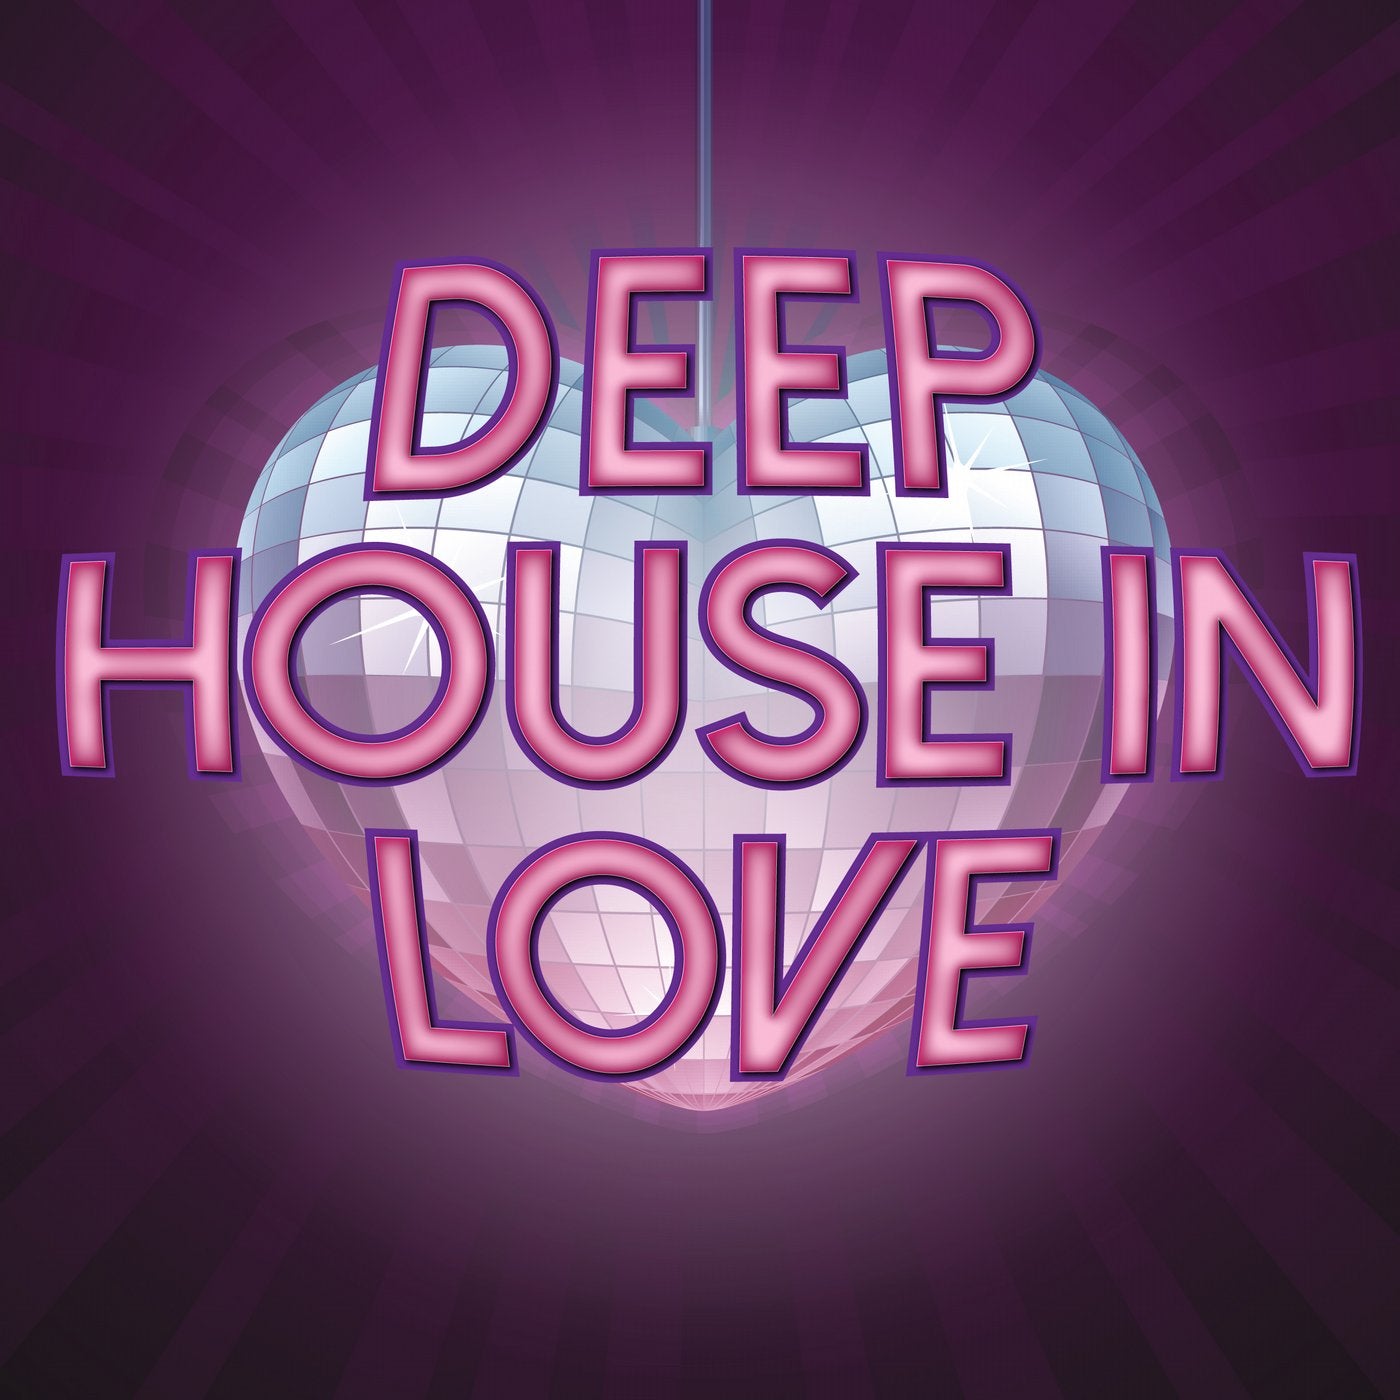 Deep House in Love